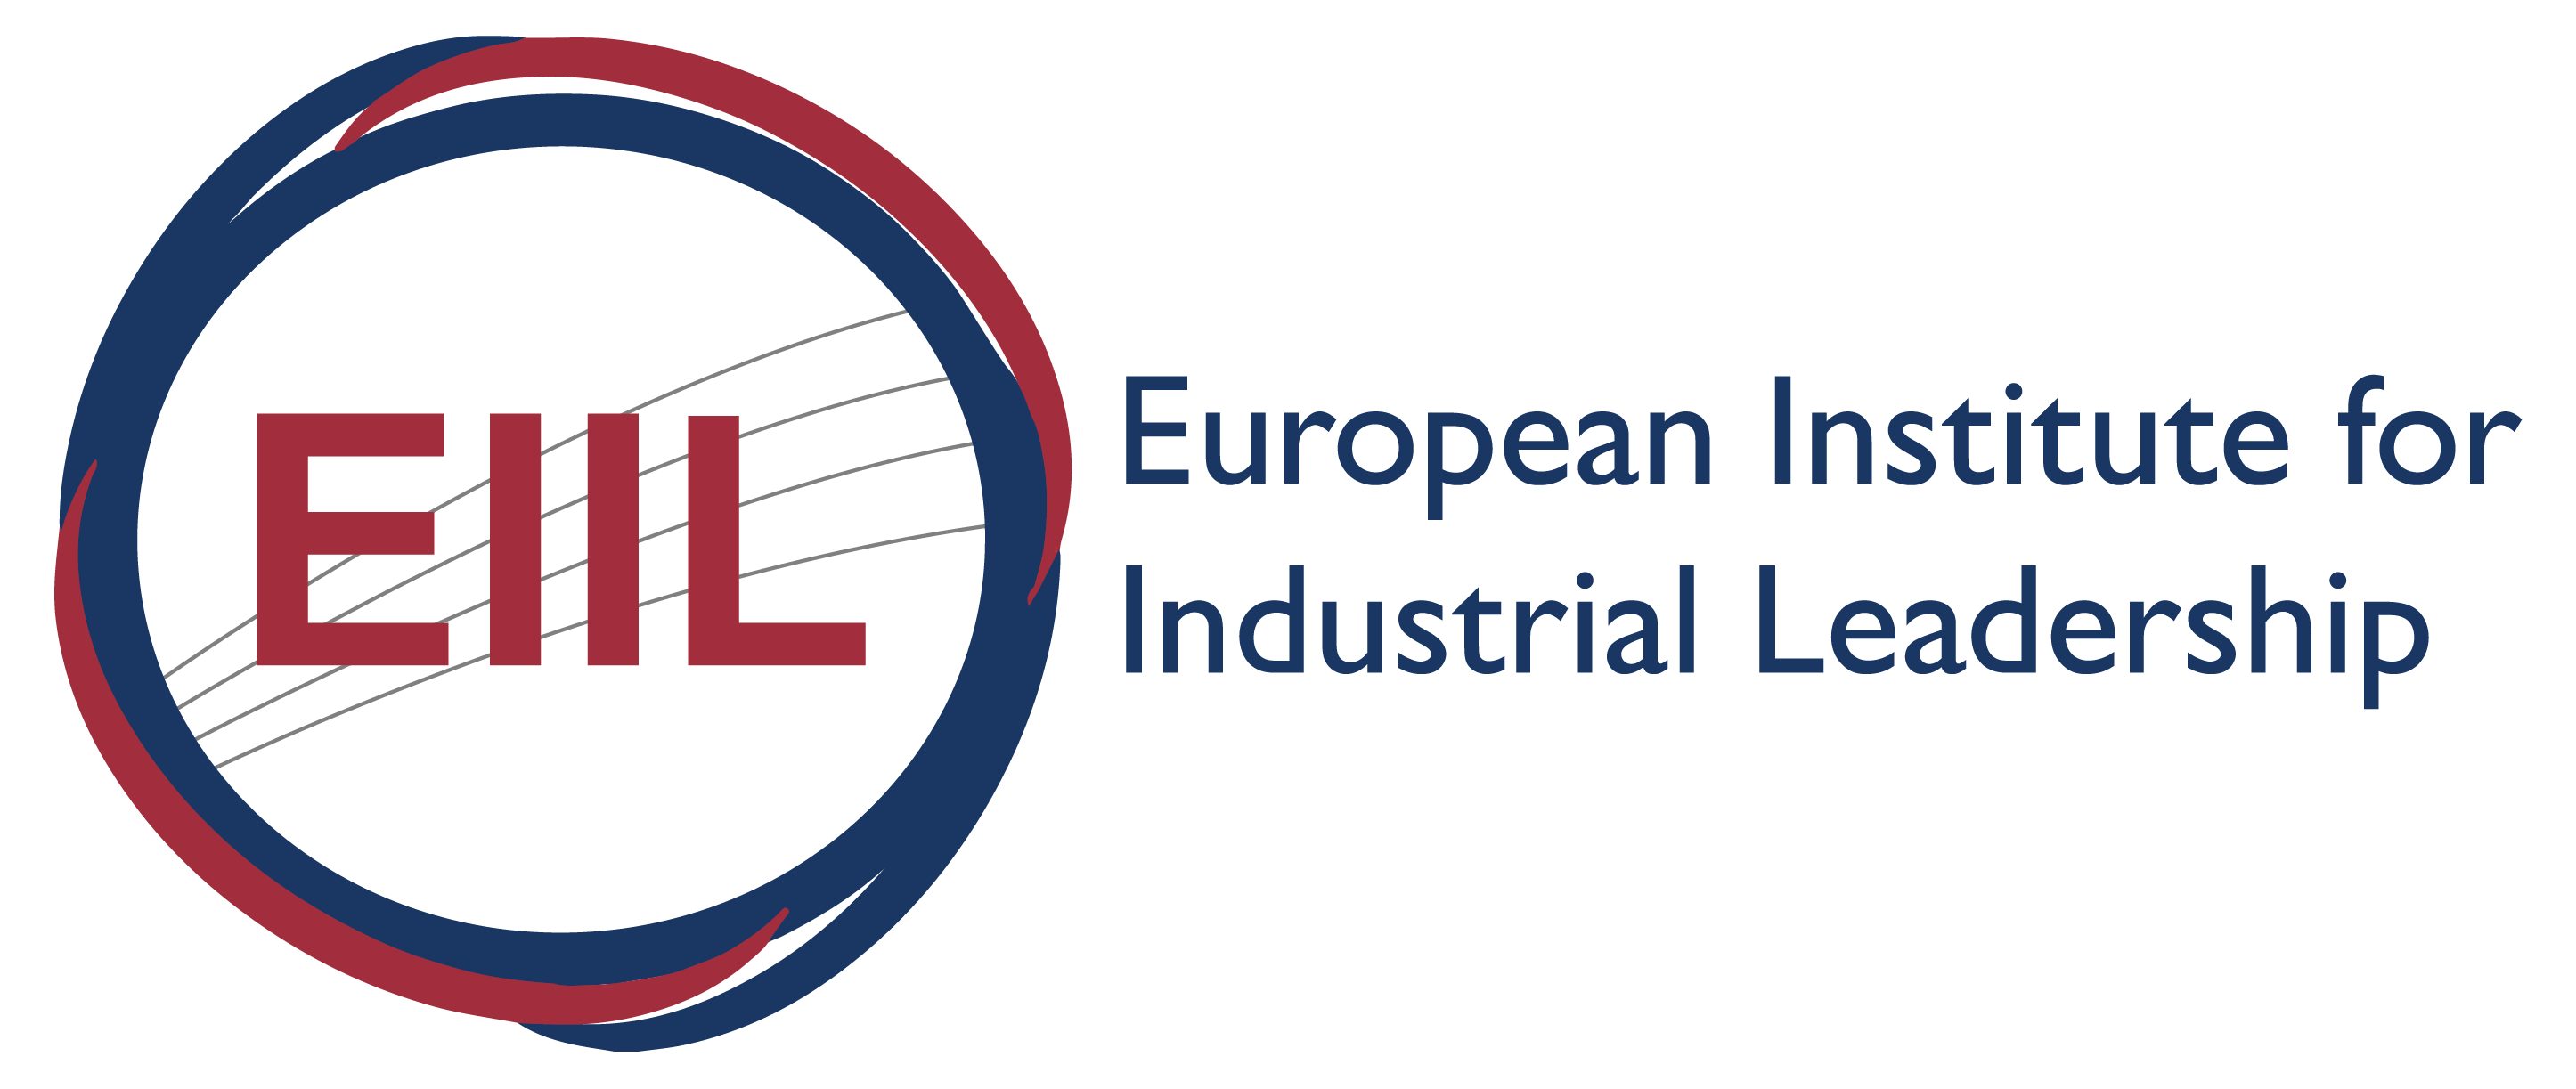 European Institute for Industrial Leadership